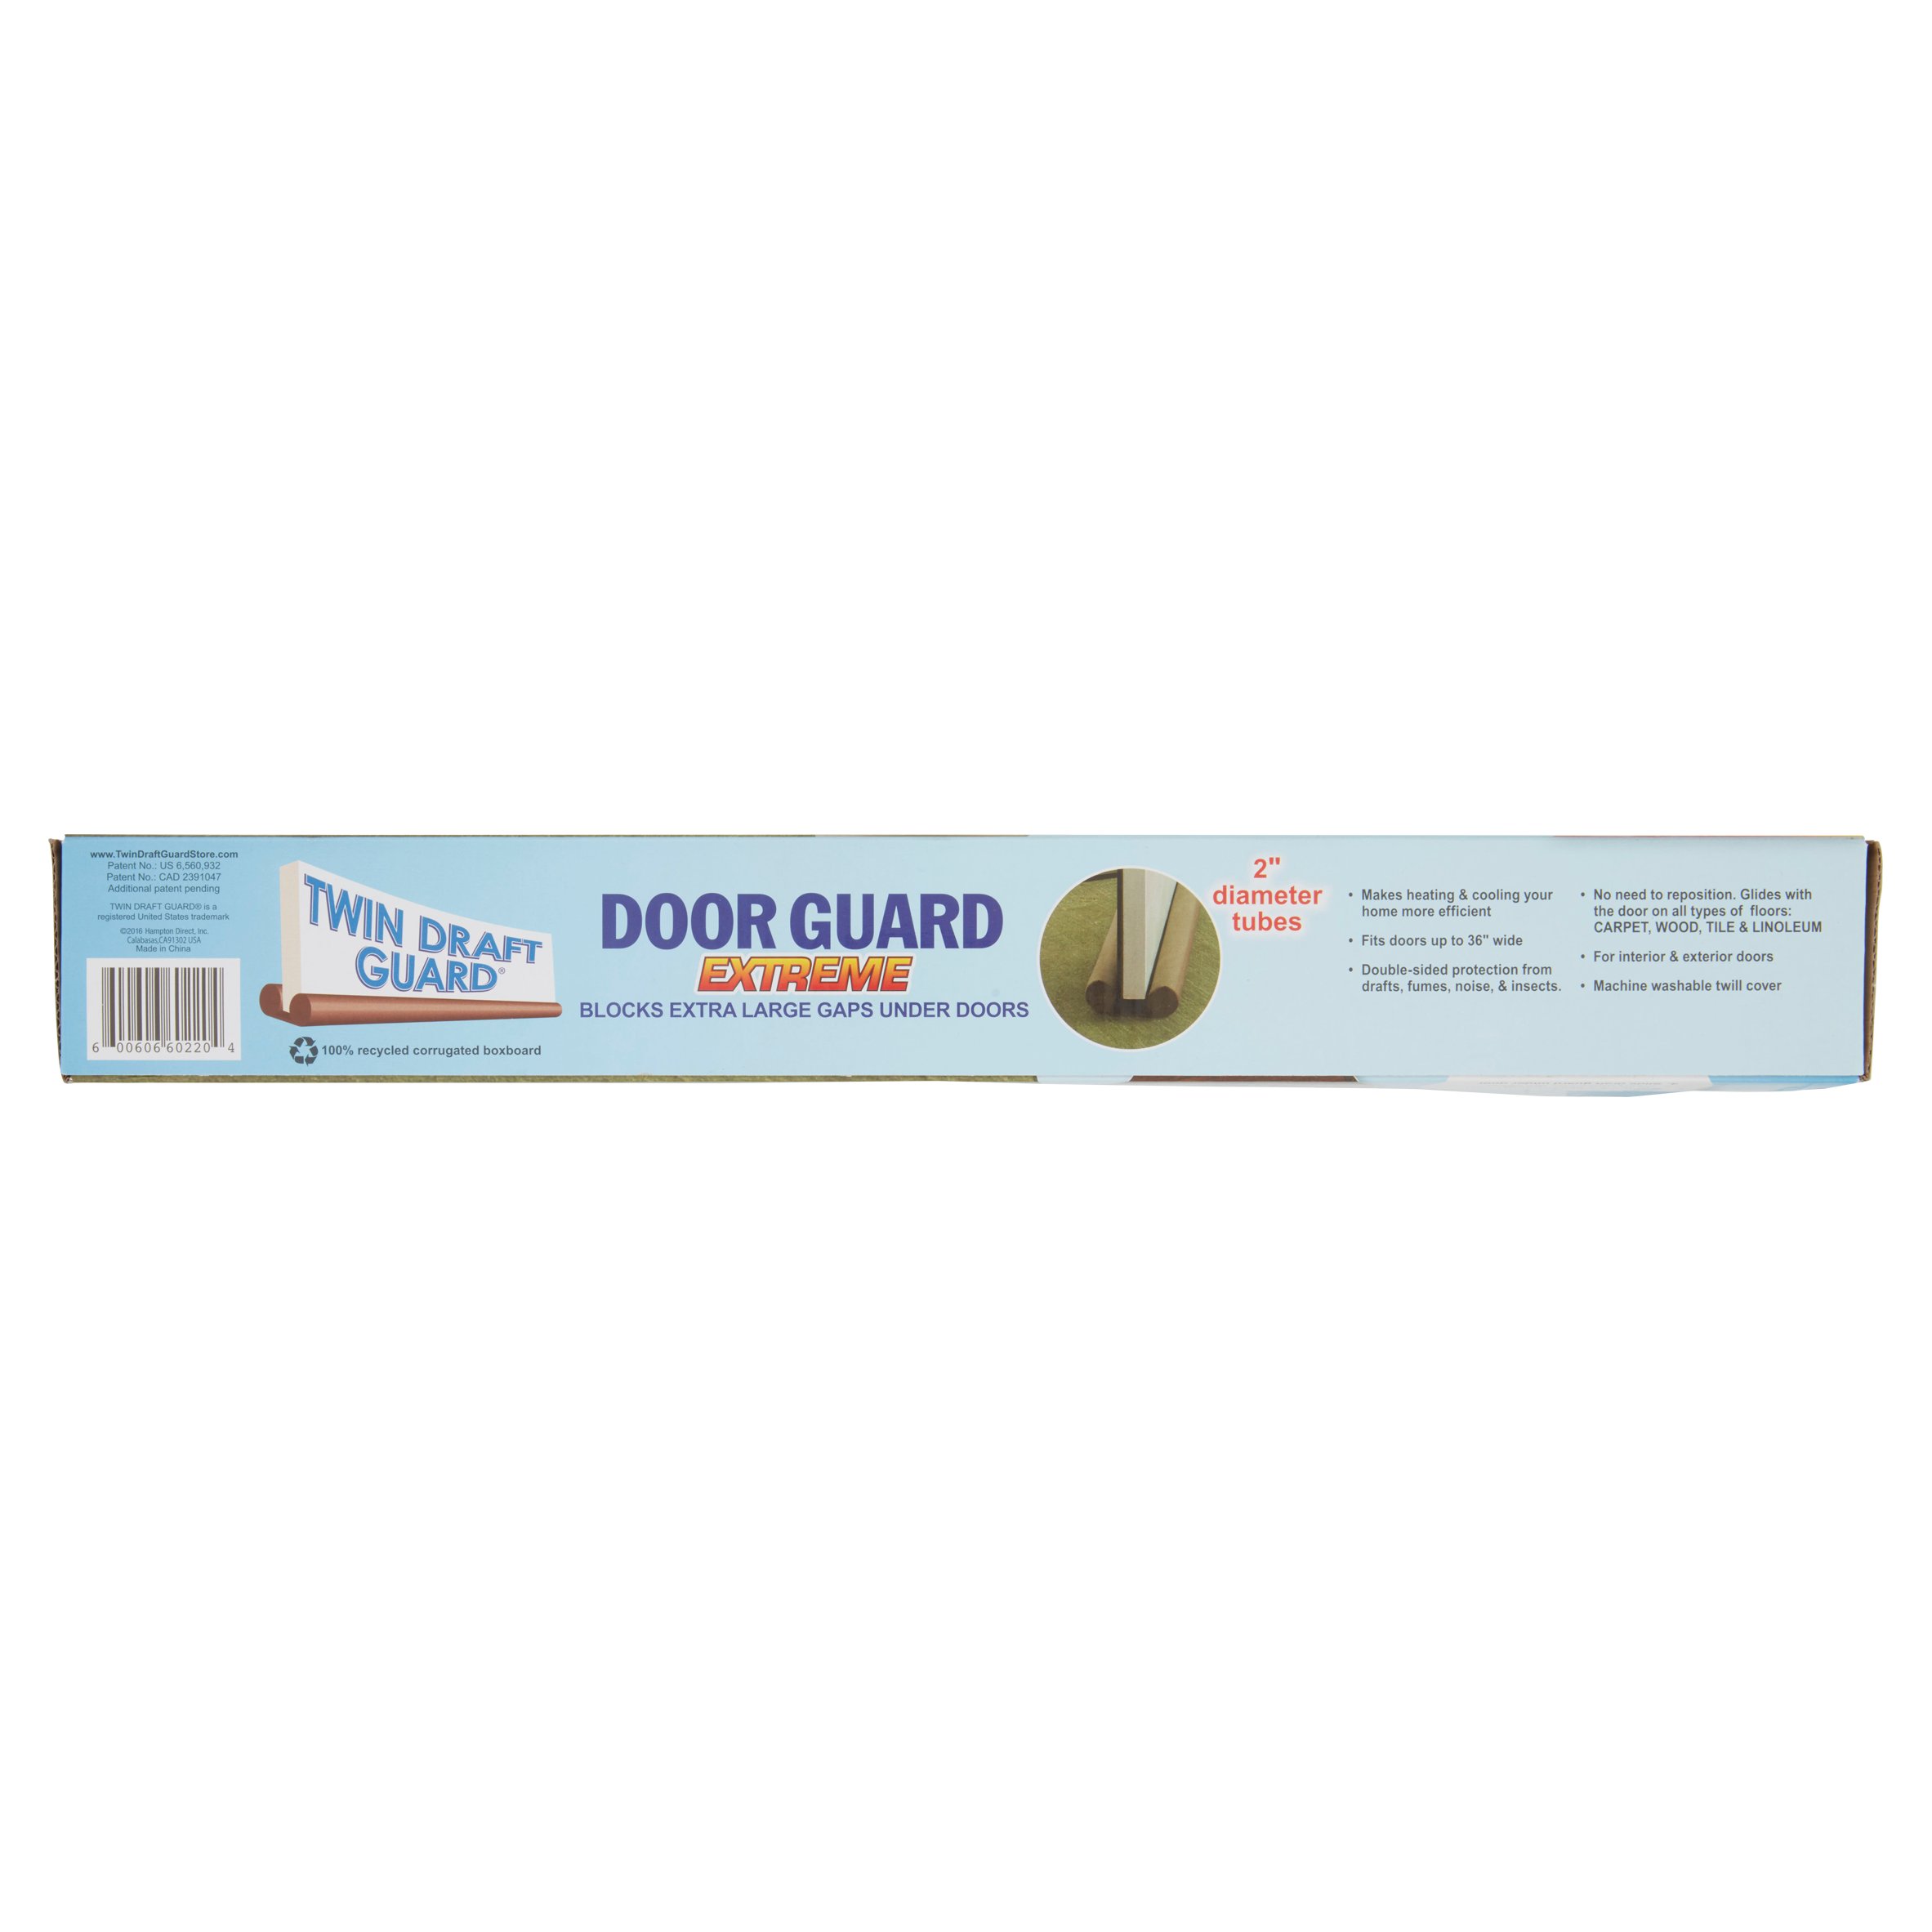 Twin Draft Guard Extreme Door Guard - image 5 of 5